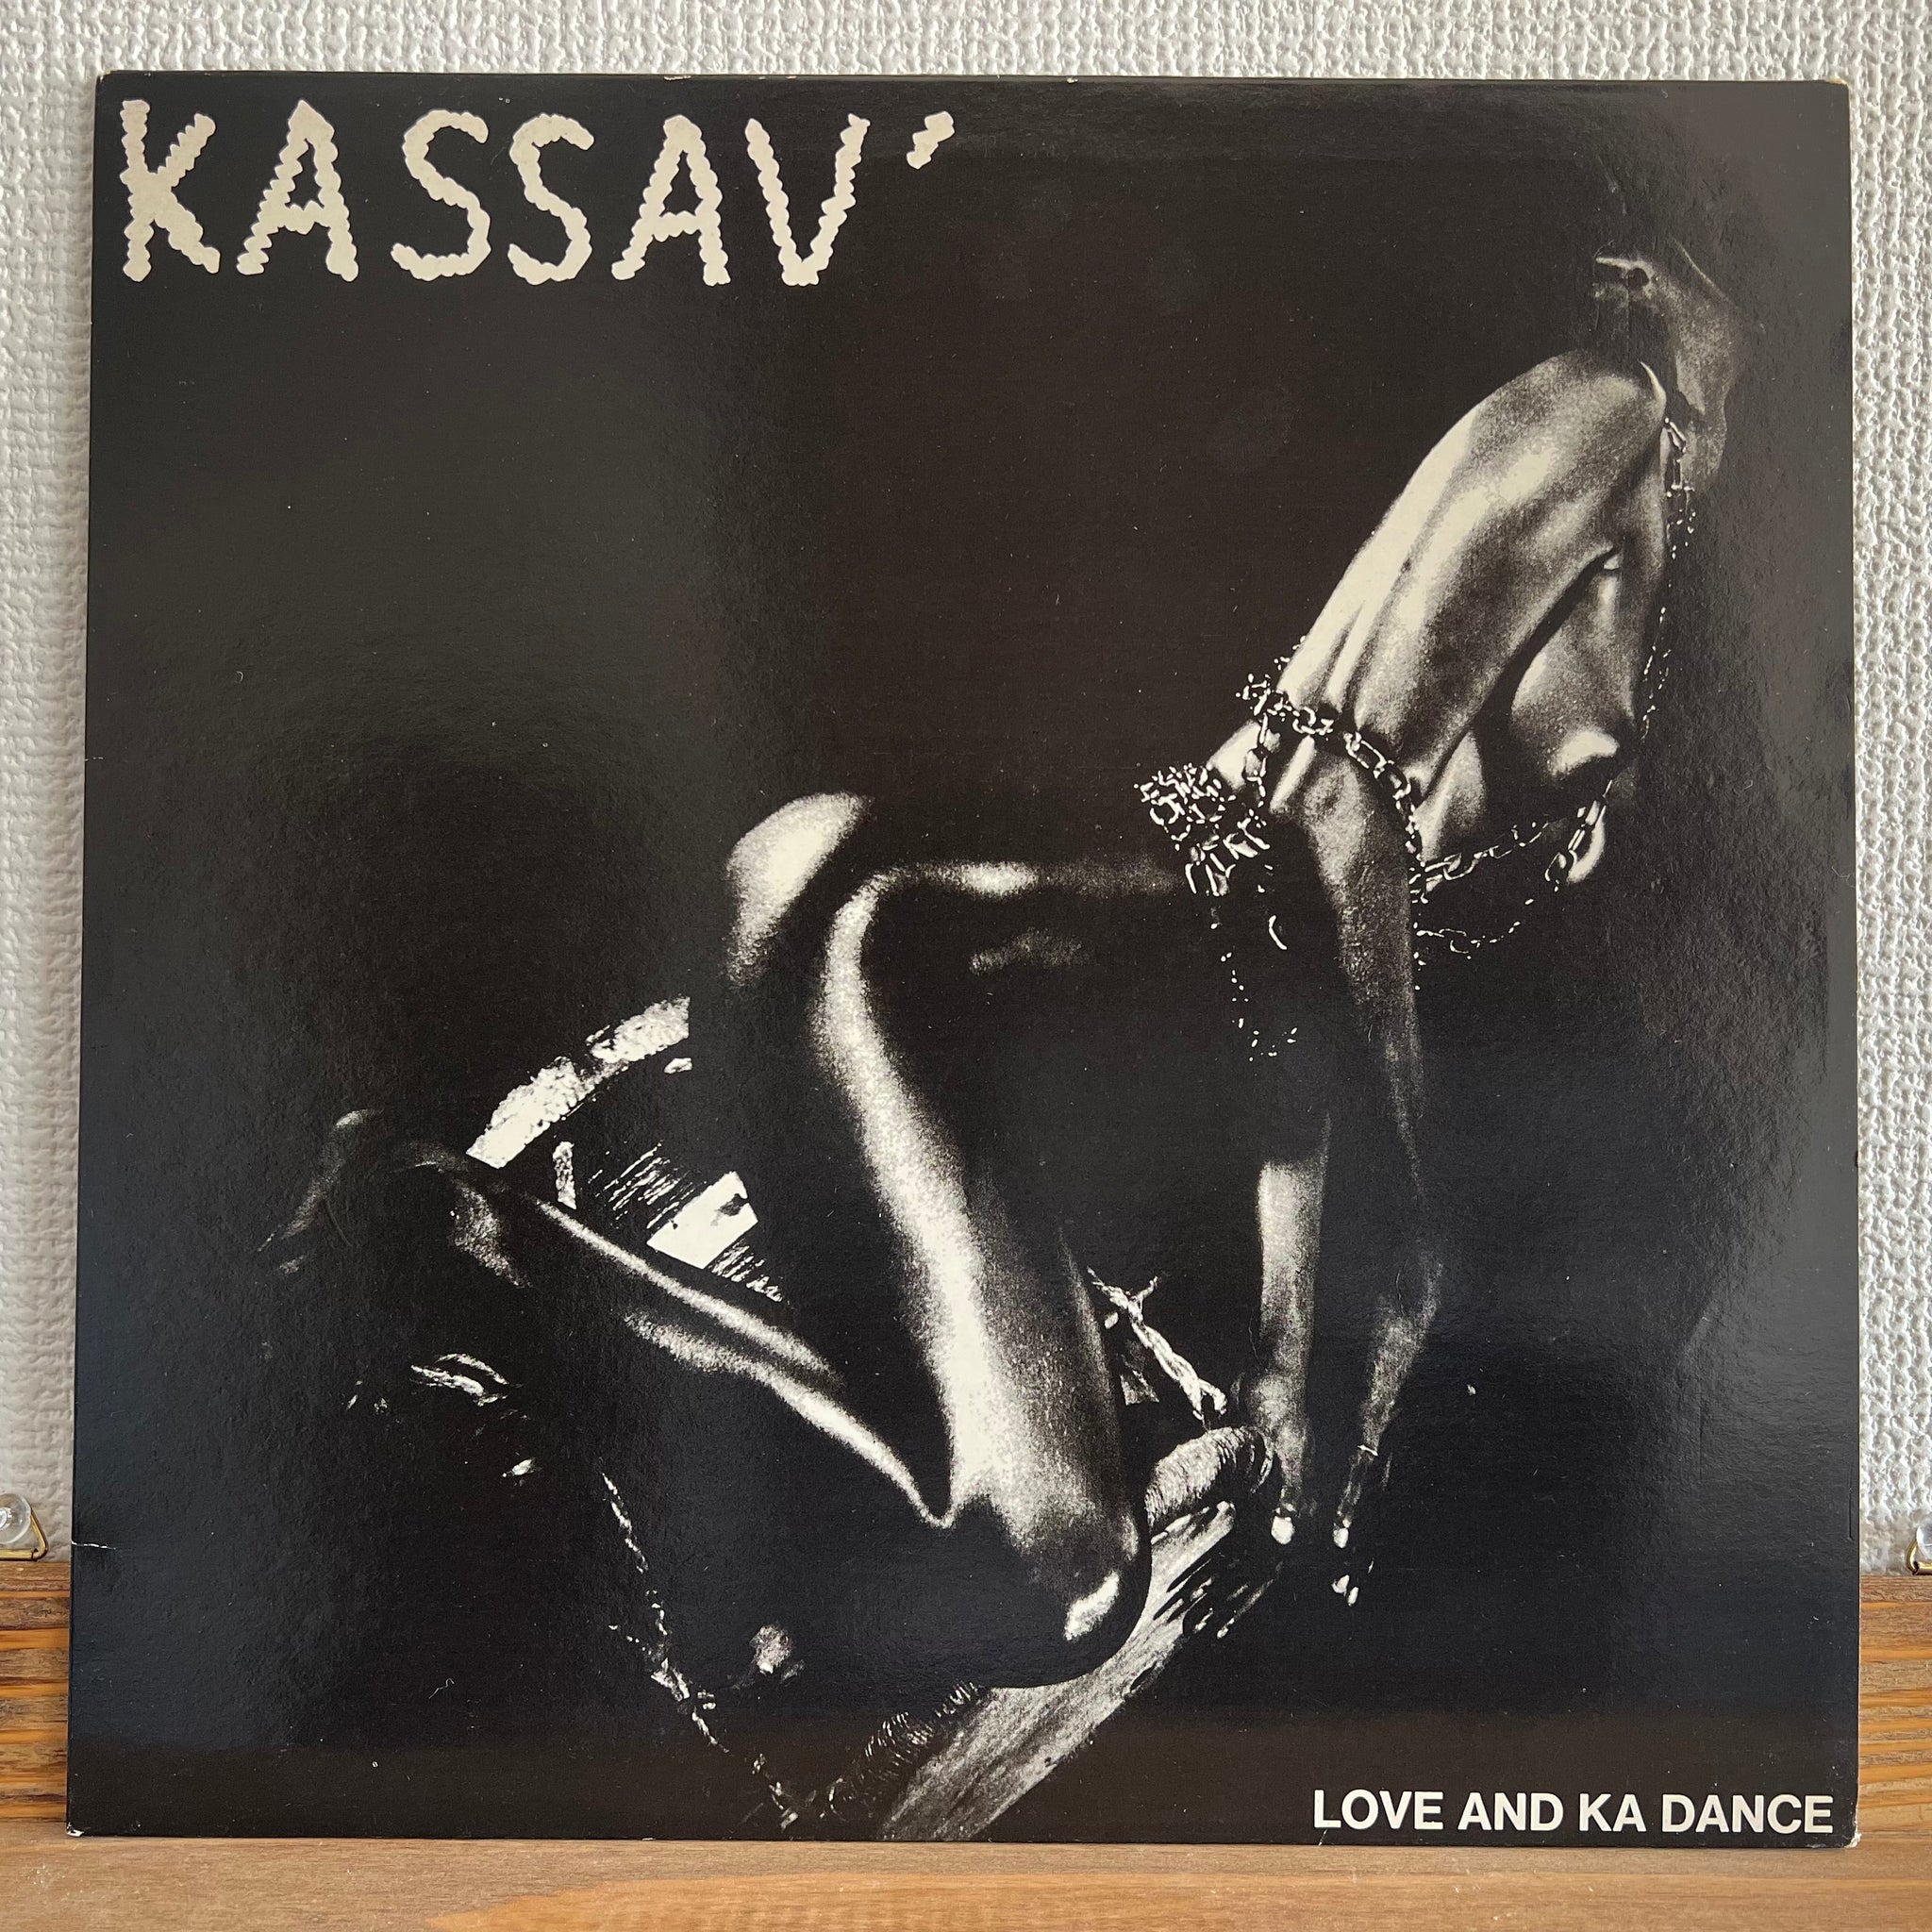 Kassav' - Love And Ka Dance